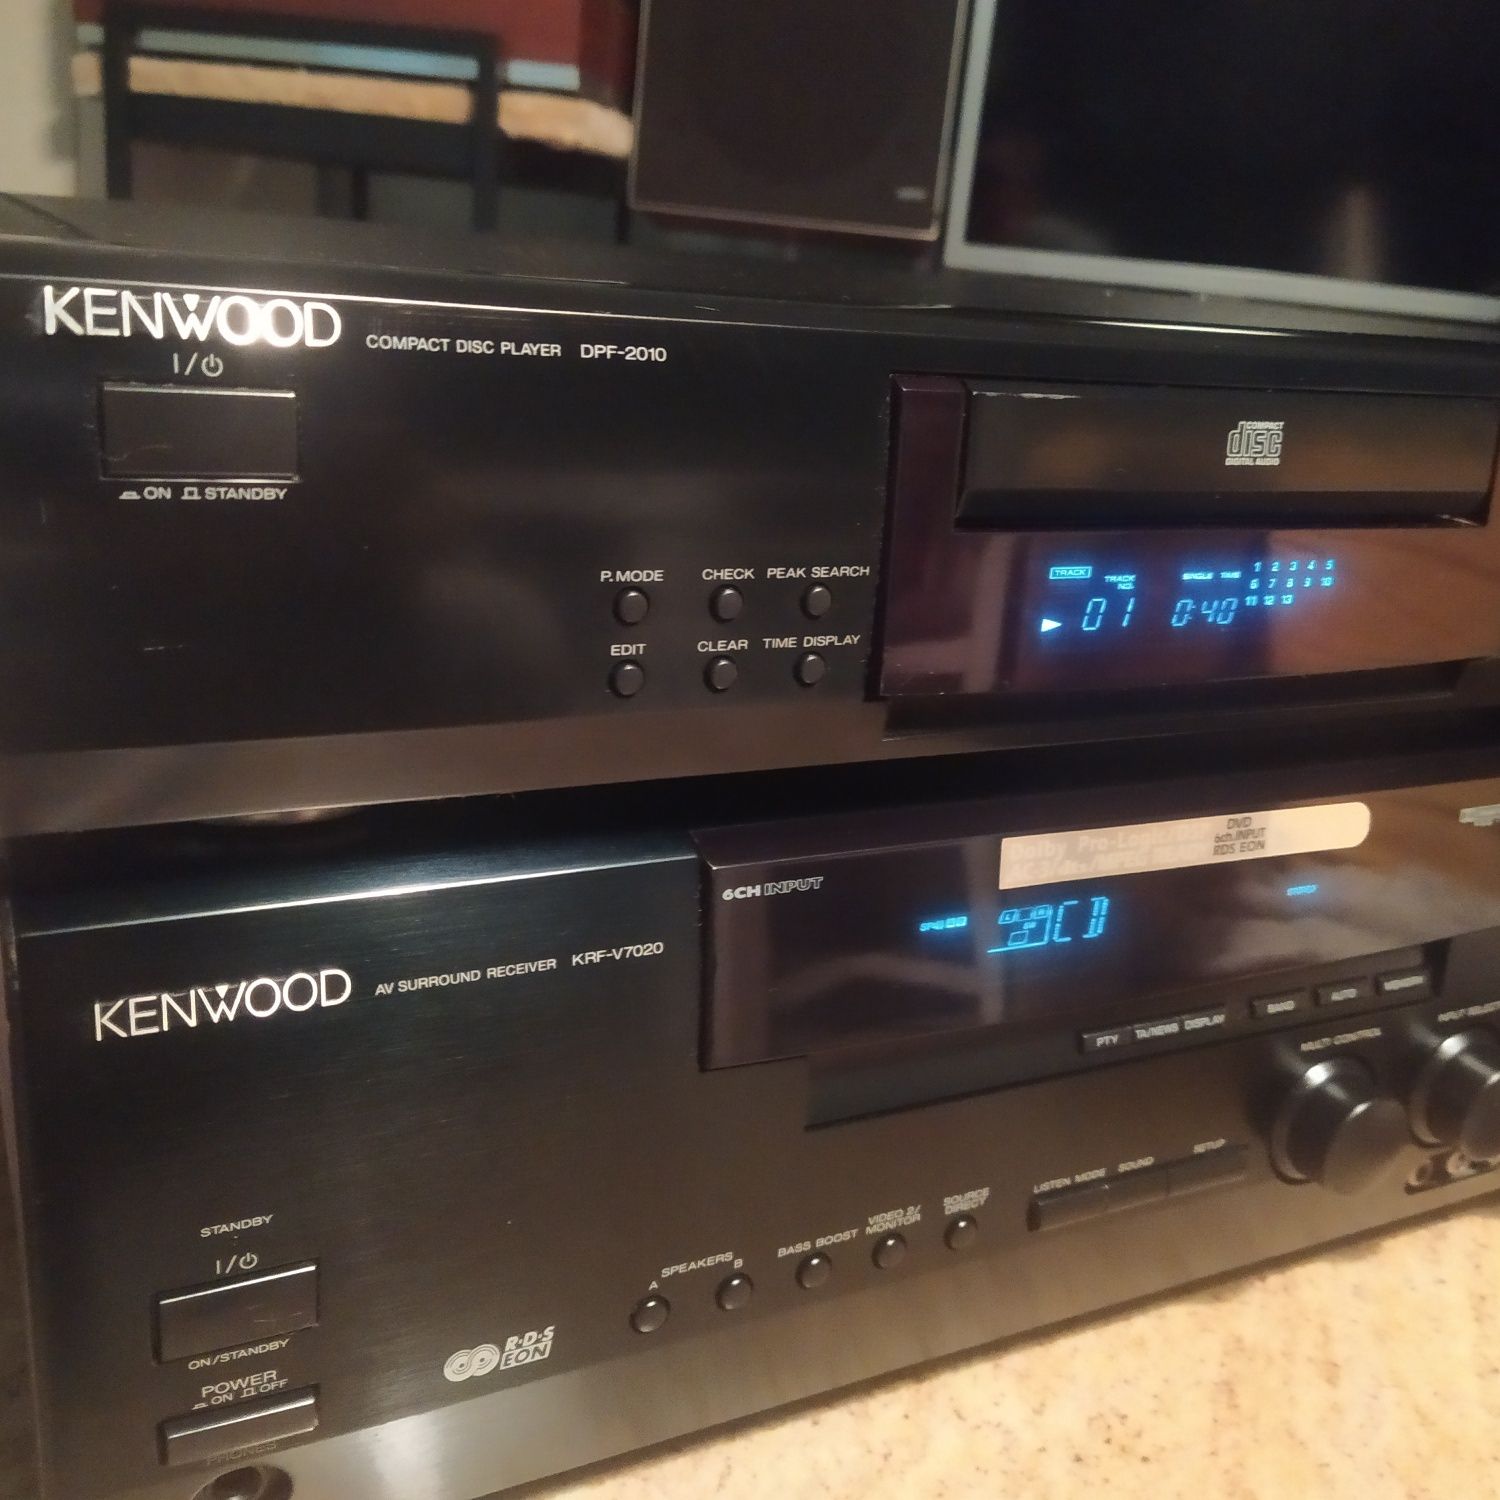 Wyprzedaż Zestaw Kenwood amplituner + CD KRF-V7020 DPF-2010